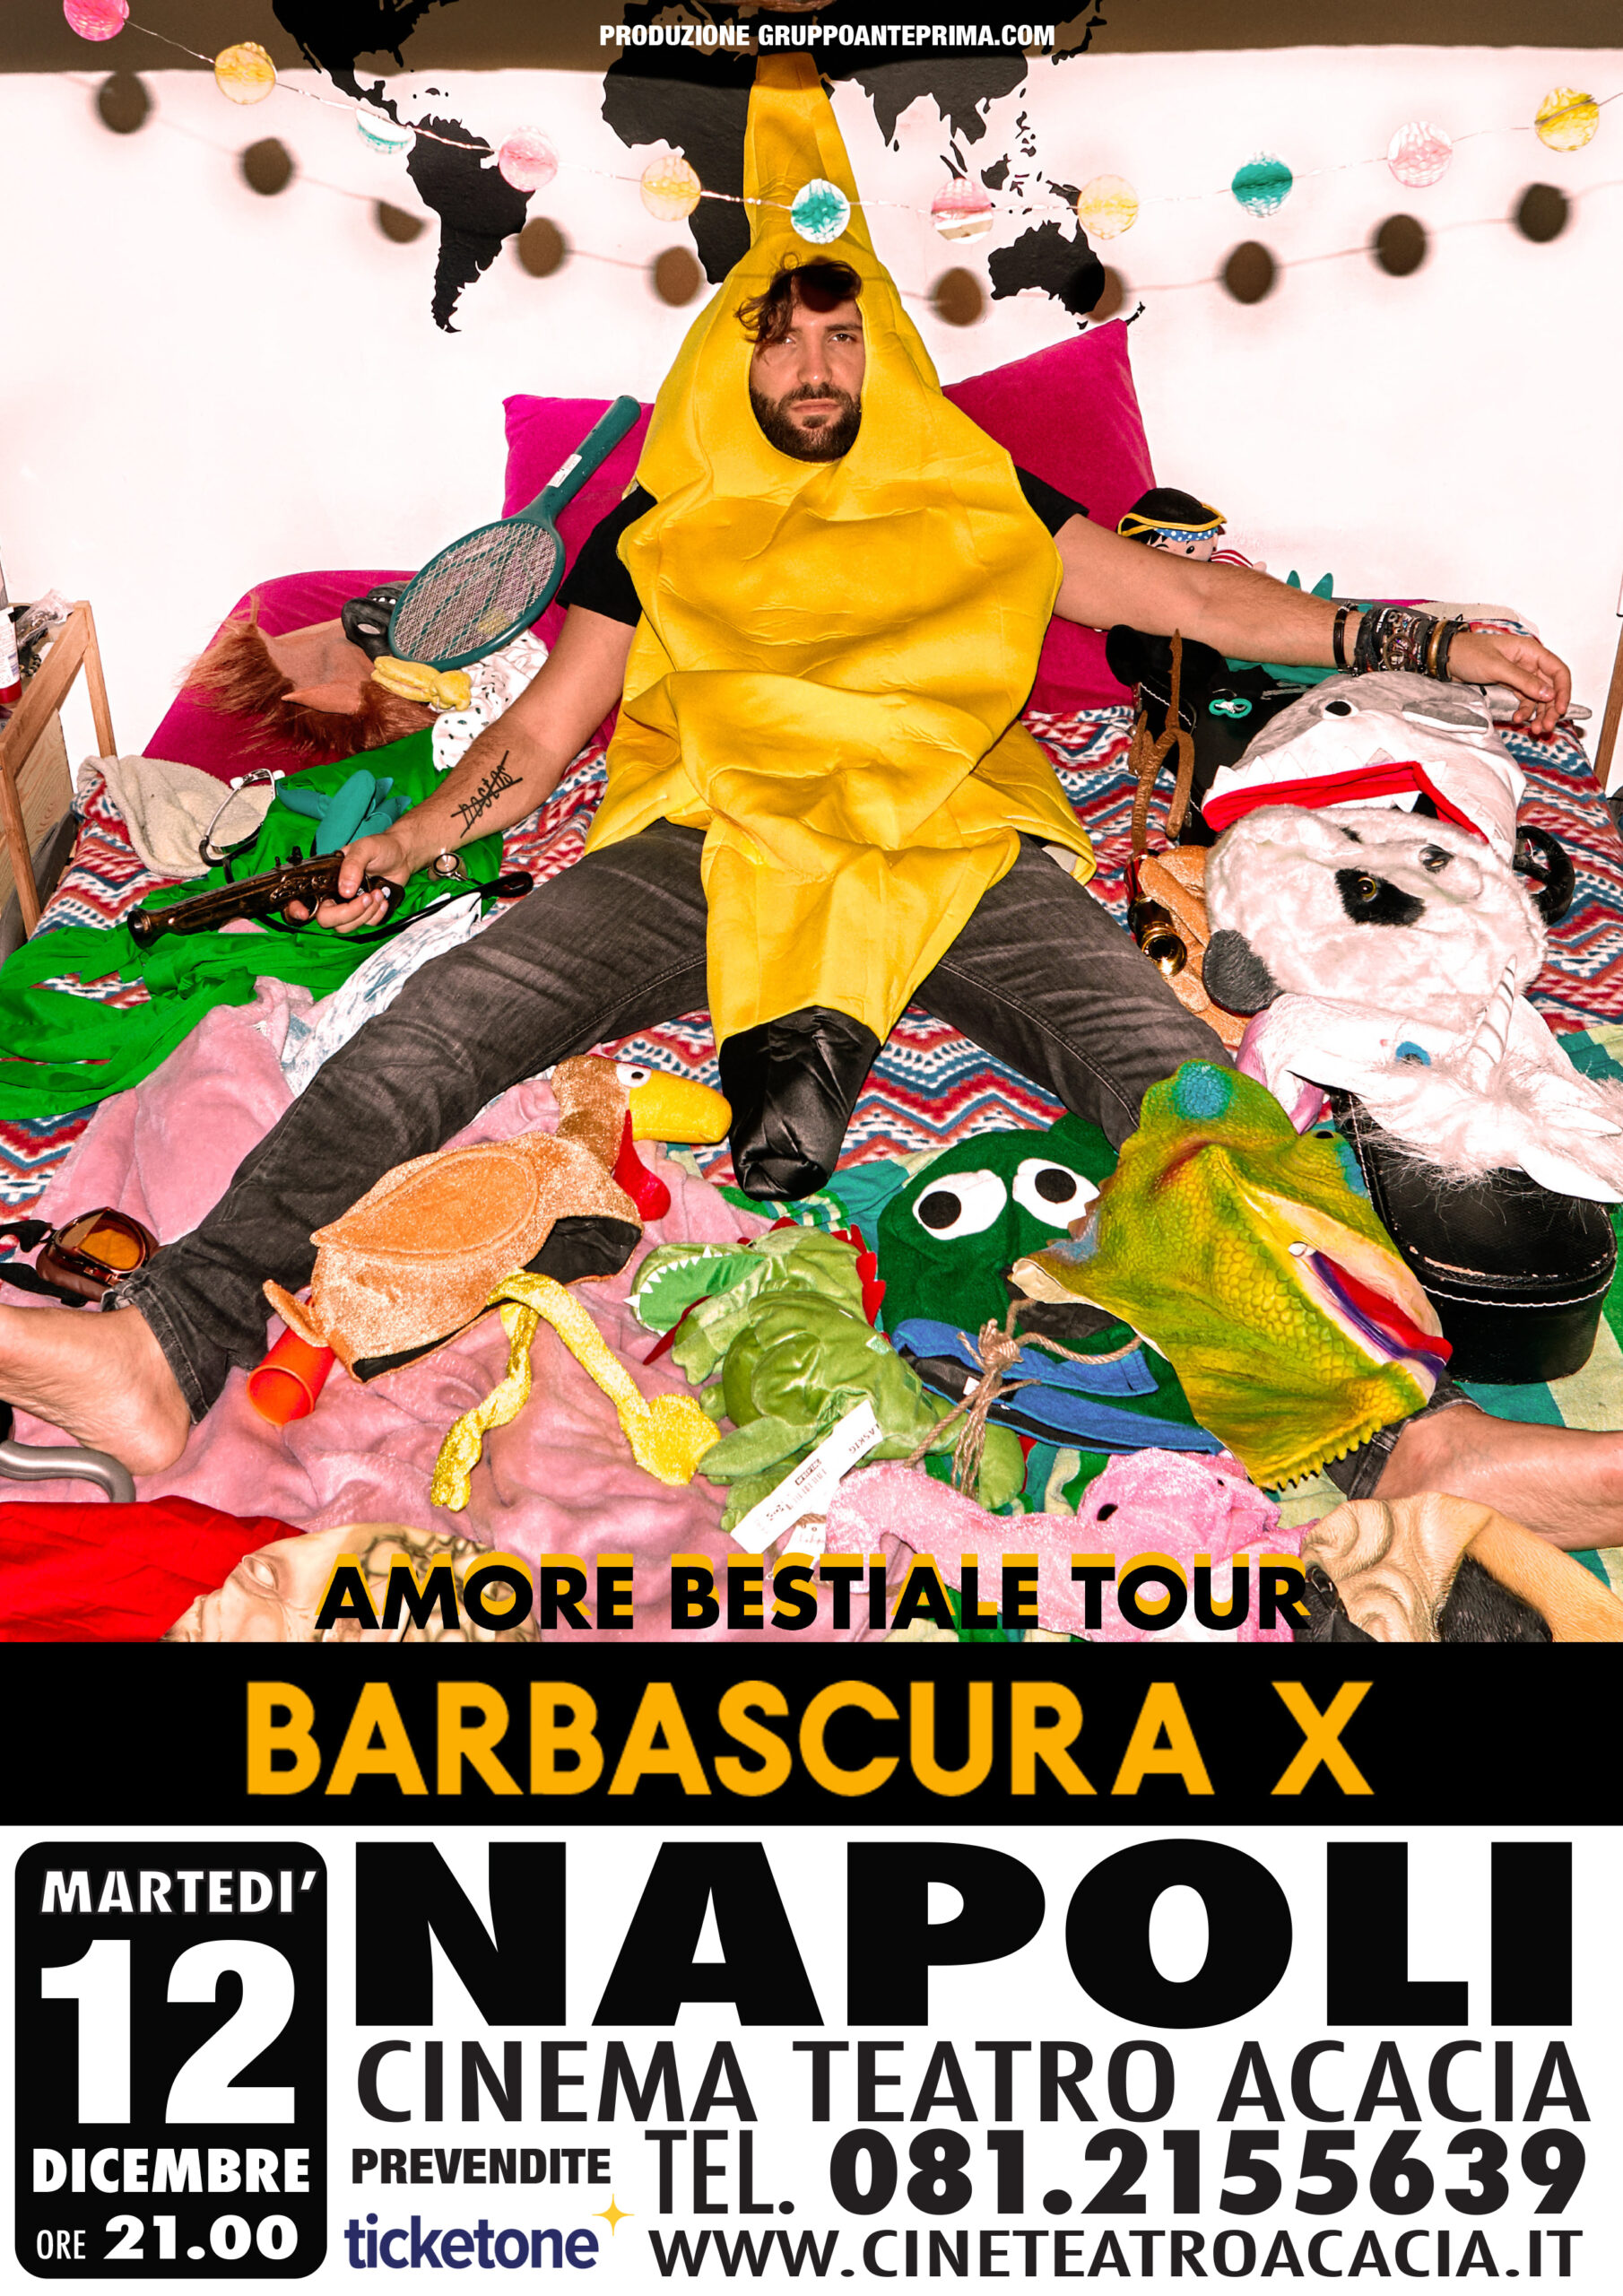 Barbascura X – Amore bestiale – Cinema Teatro Acacia